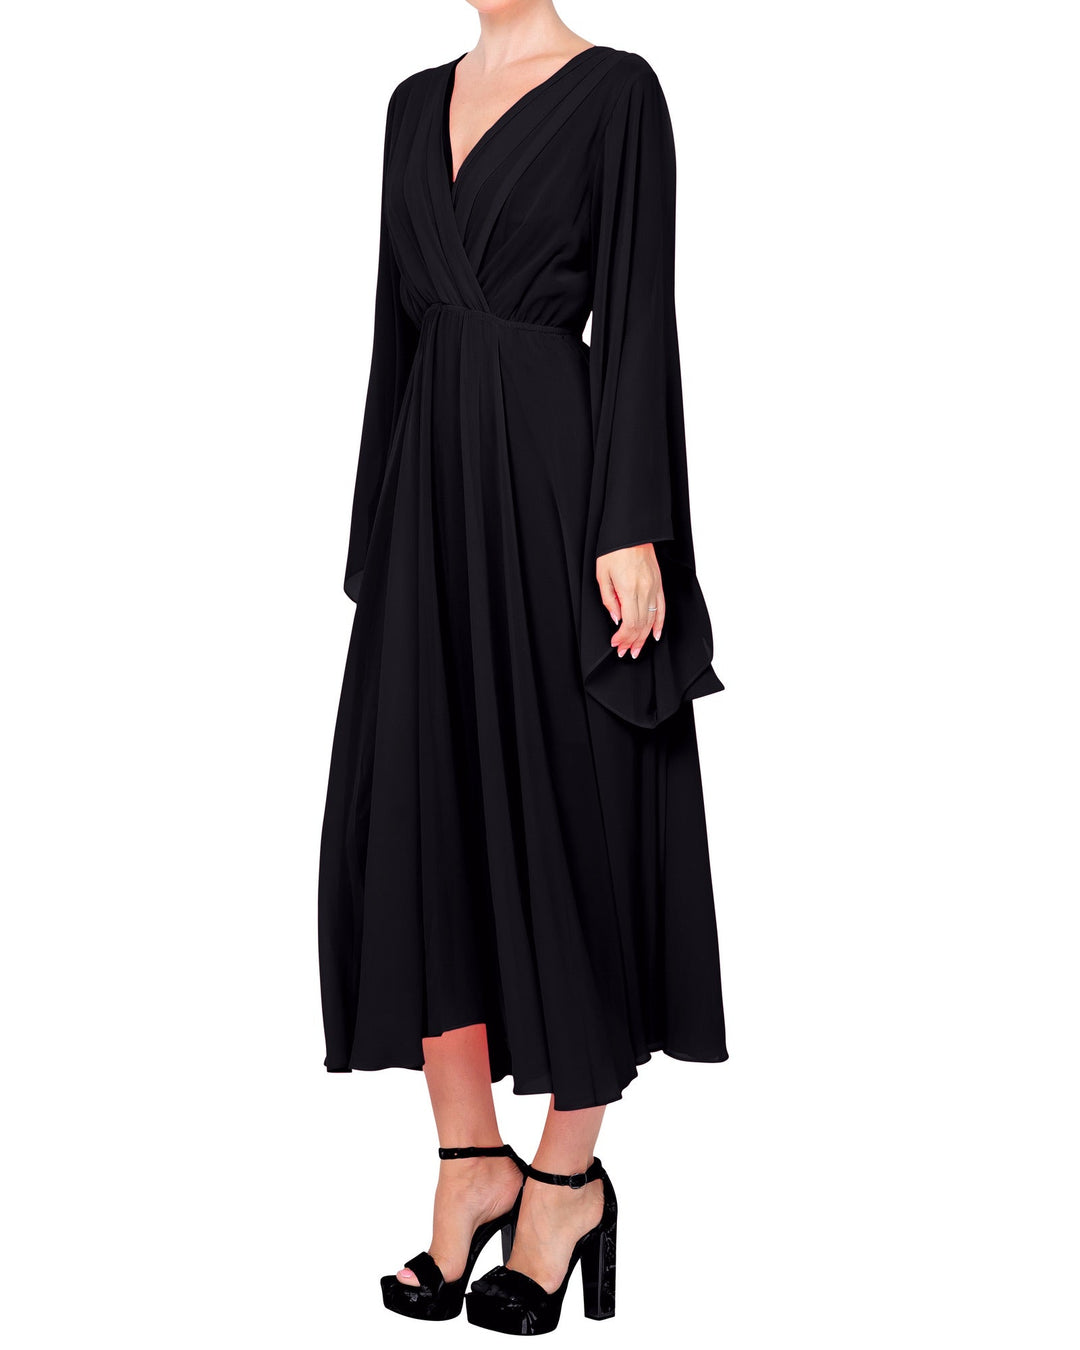 Sunset Midi Dress - Black by Meghan Fabulous